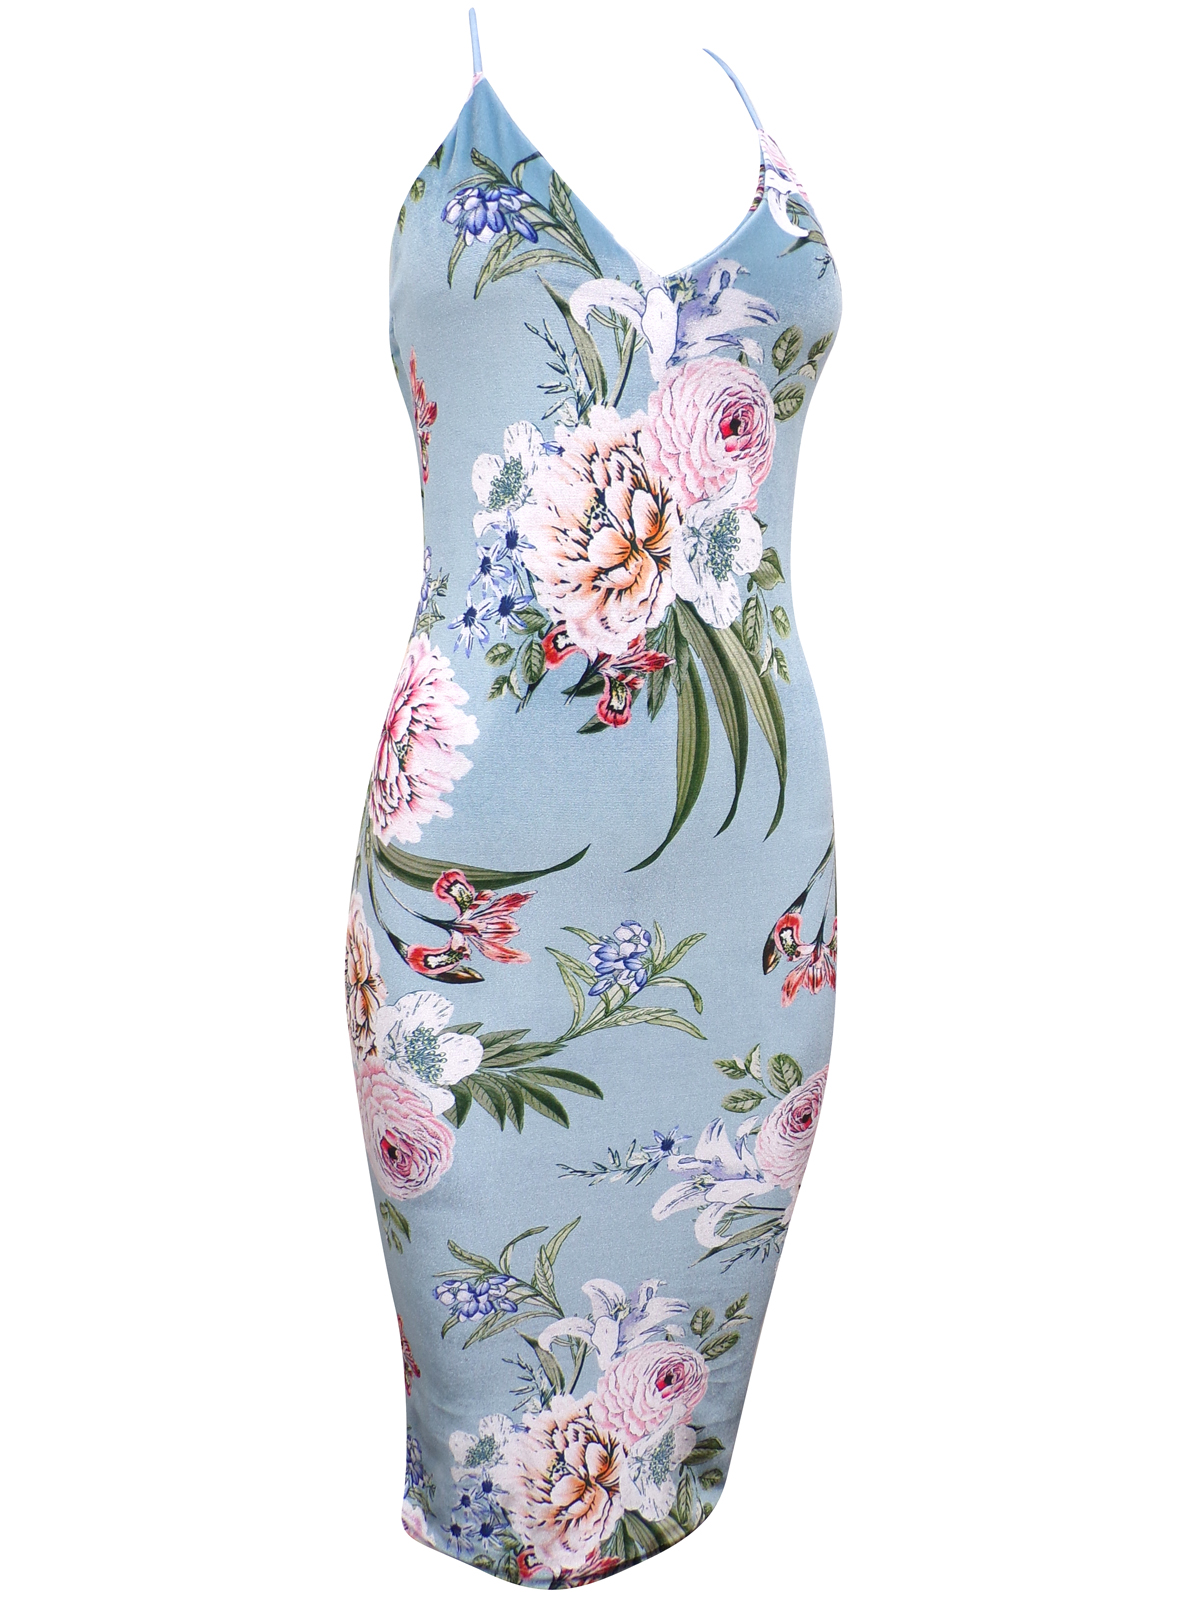 BOOHOO - - B00H00 BLUE Oriental Floral Print Bodycon Dress - Size 8 to 14